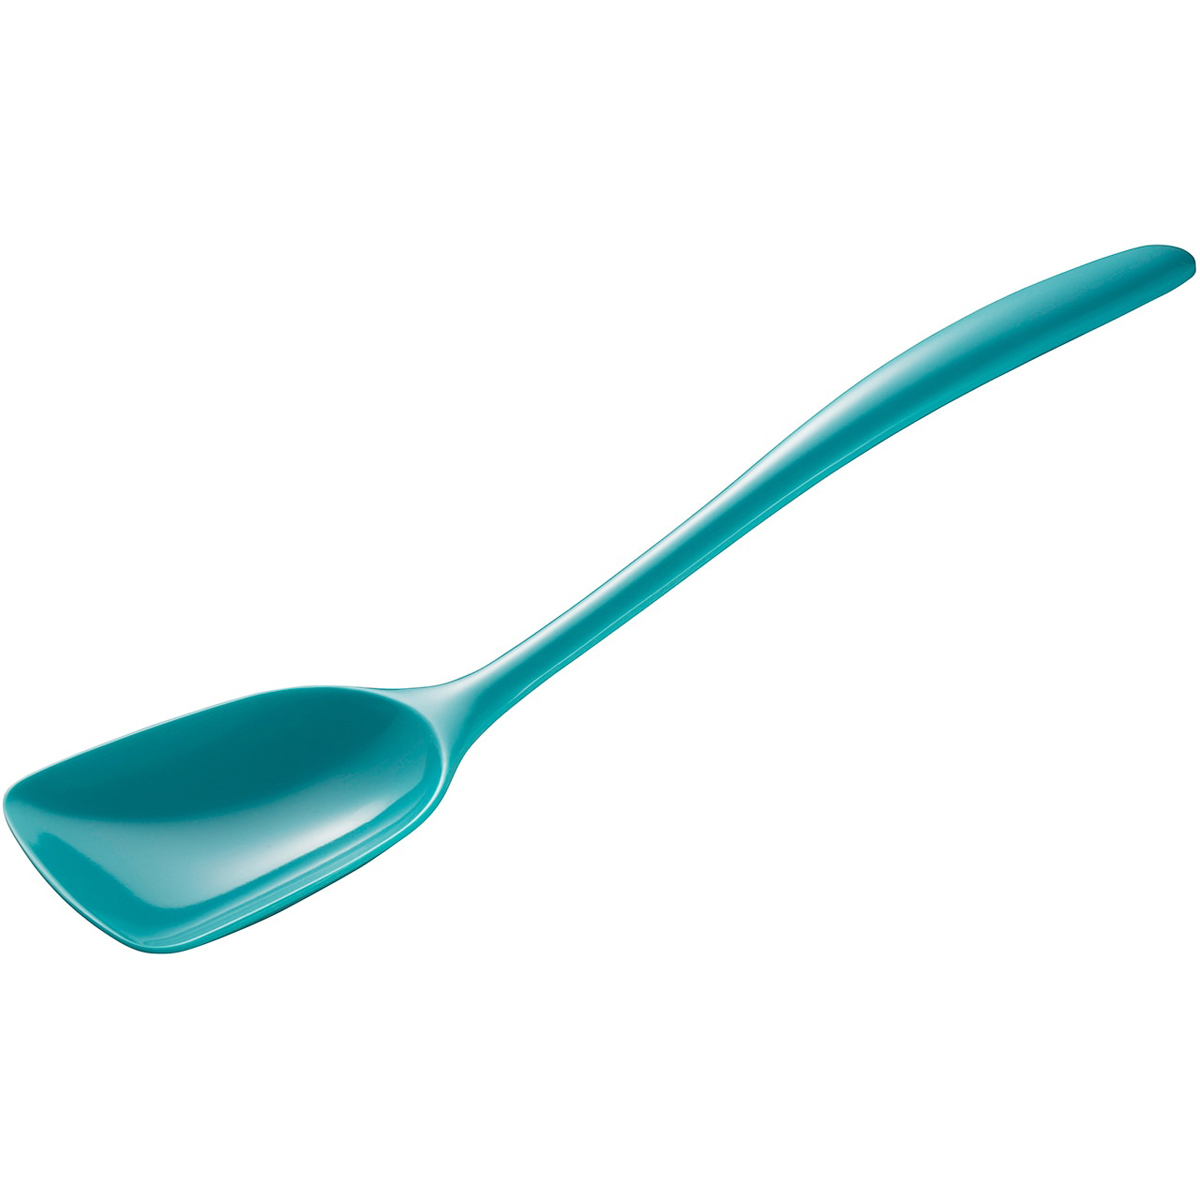 Gourmac G524TU 11" Turquoise Melamine Serving Spoon